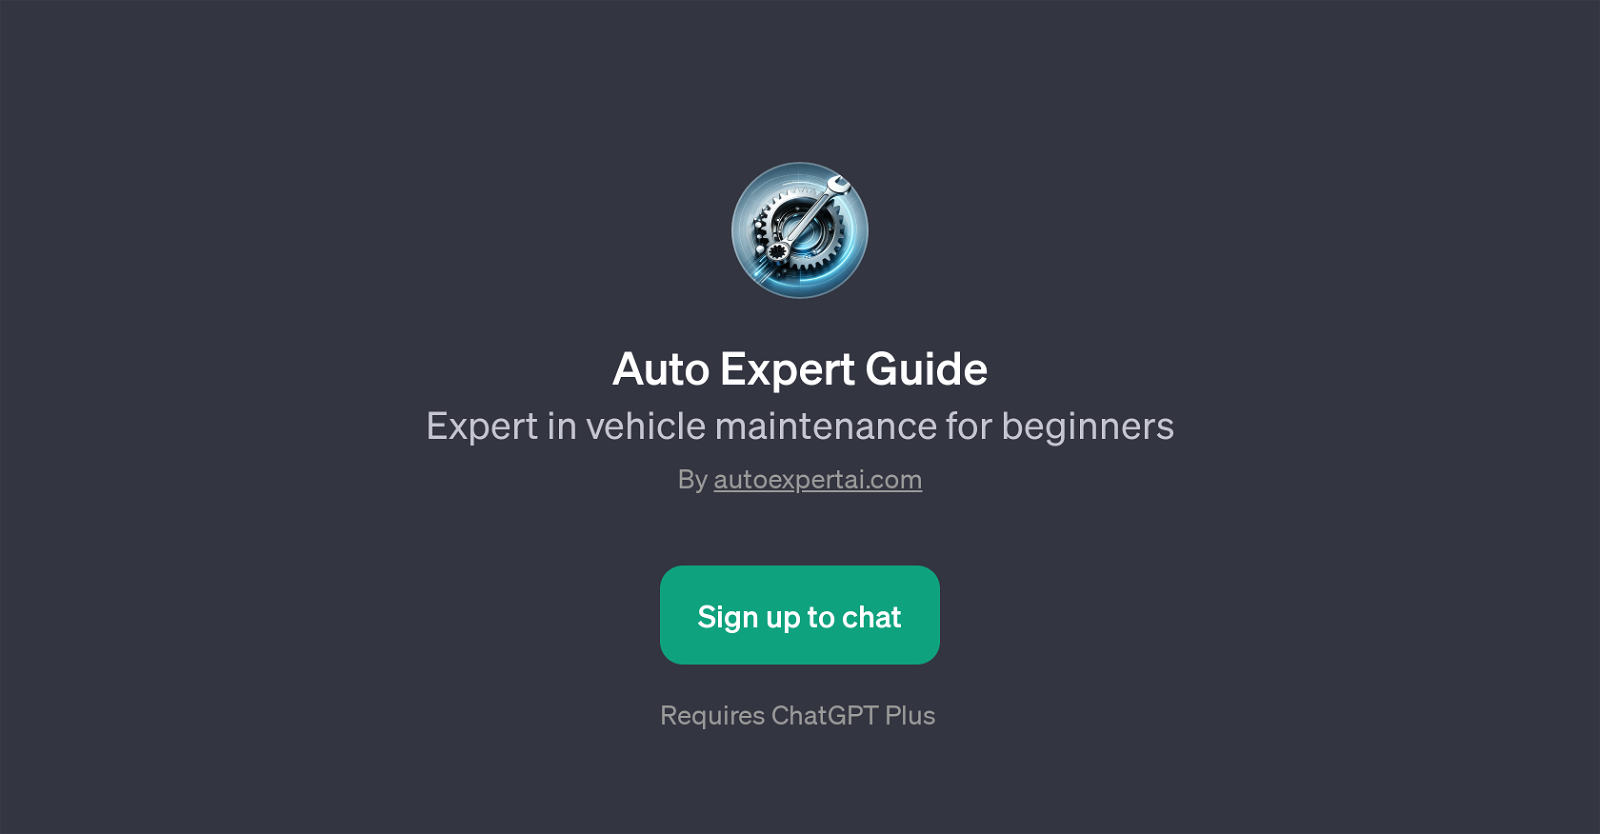 Auto Expert Guide website